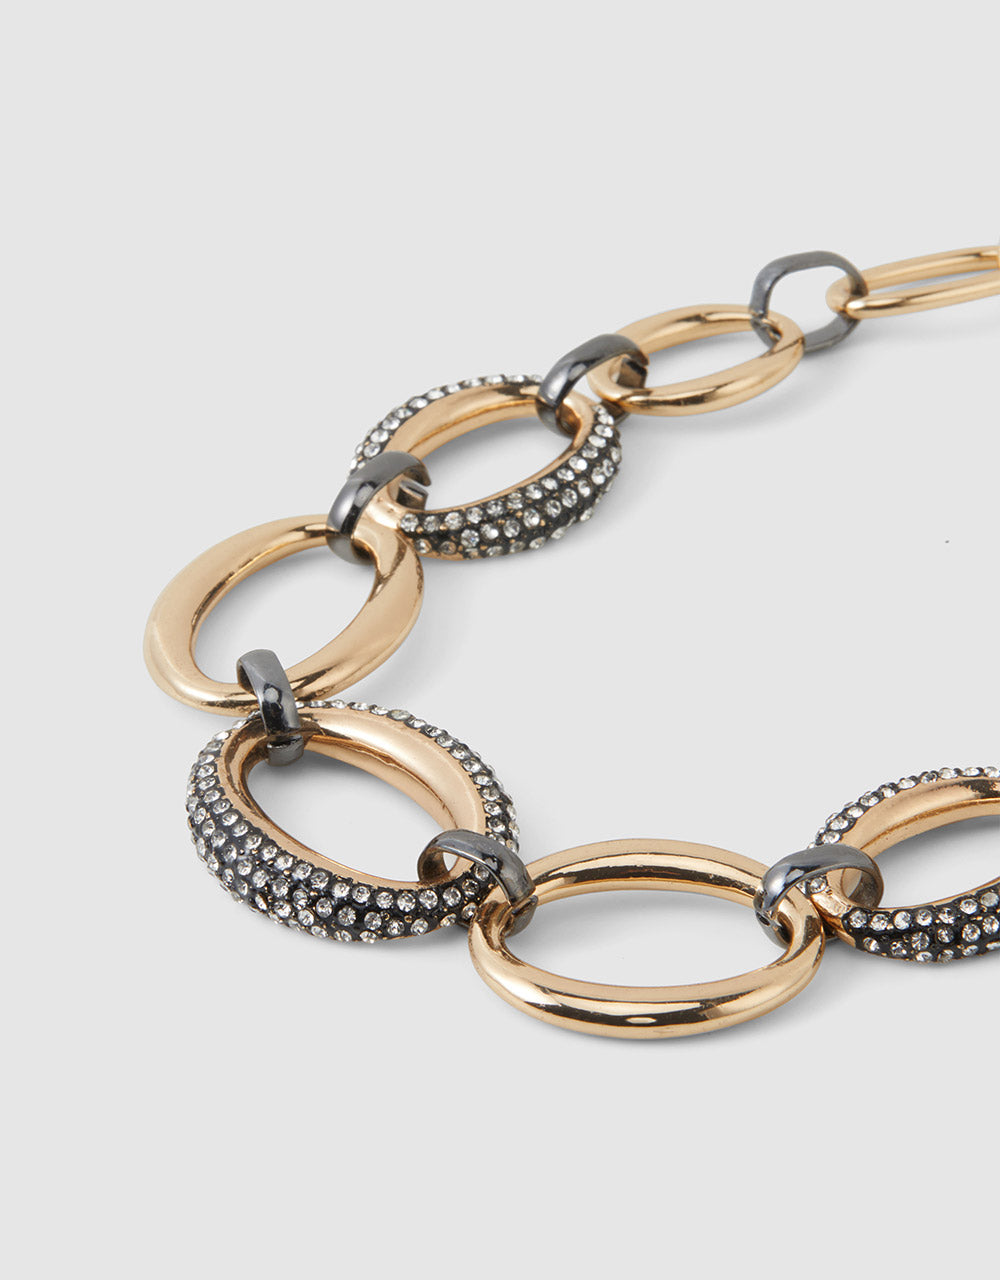 Rhinestone Detail Chain Necklace